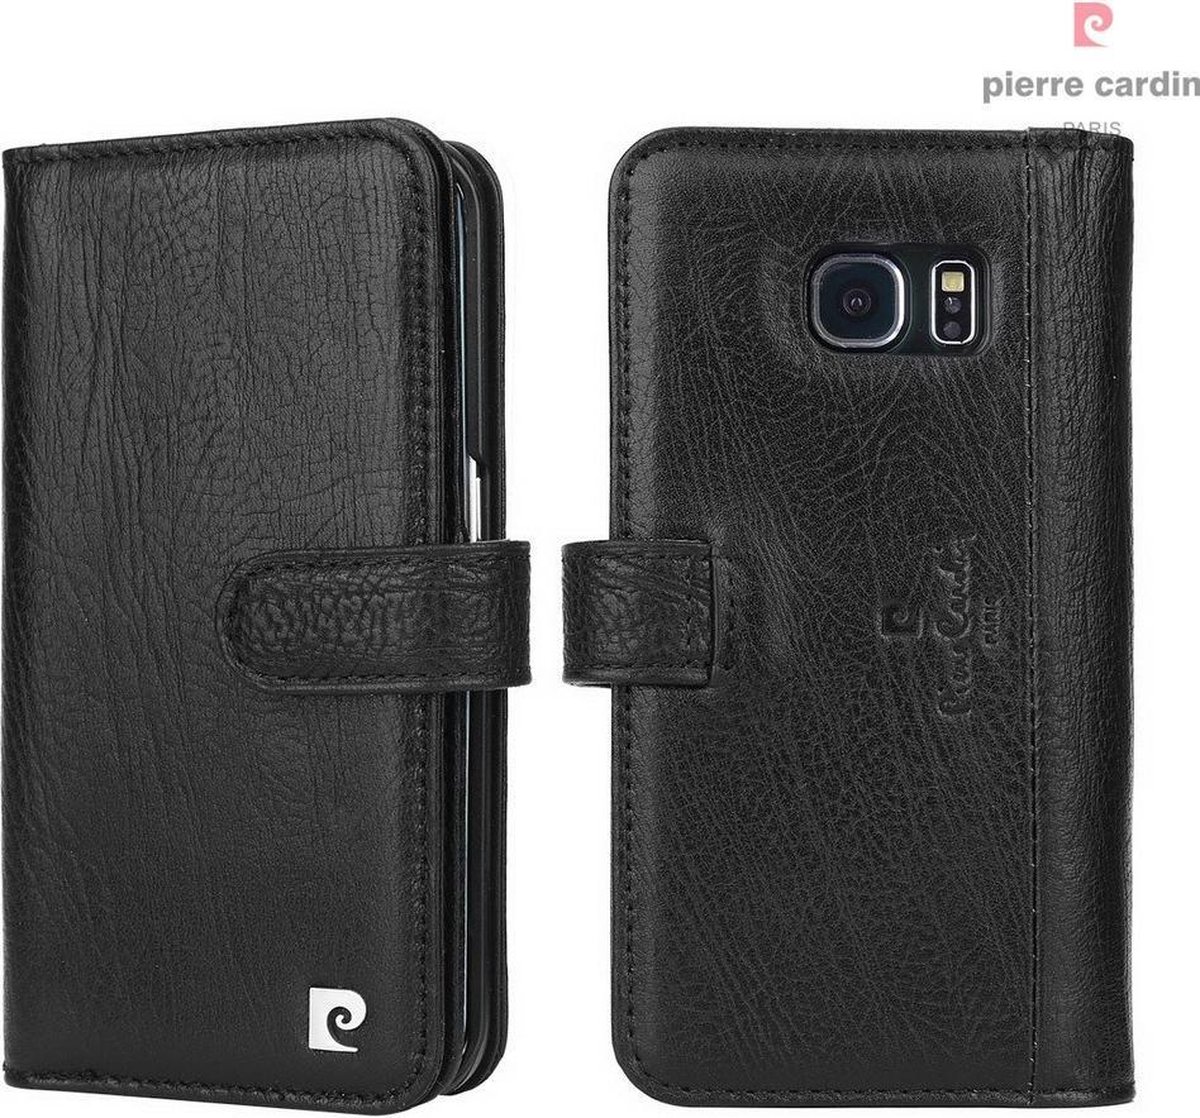 Pierre Cardin Wallet Case Samsung Galaxy S6 Edge